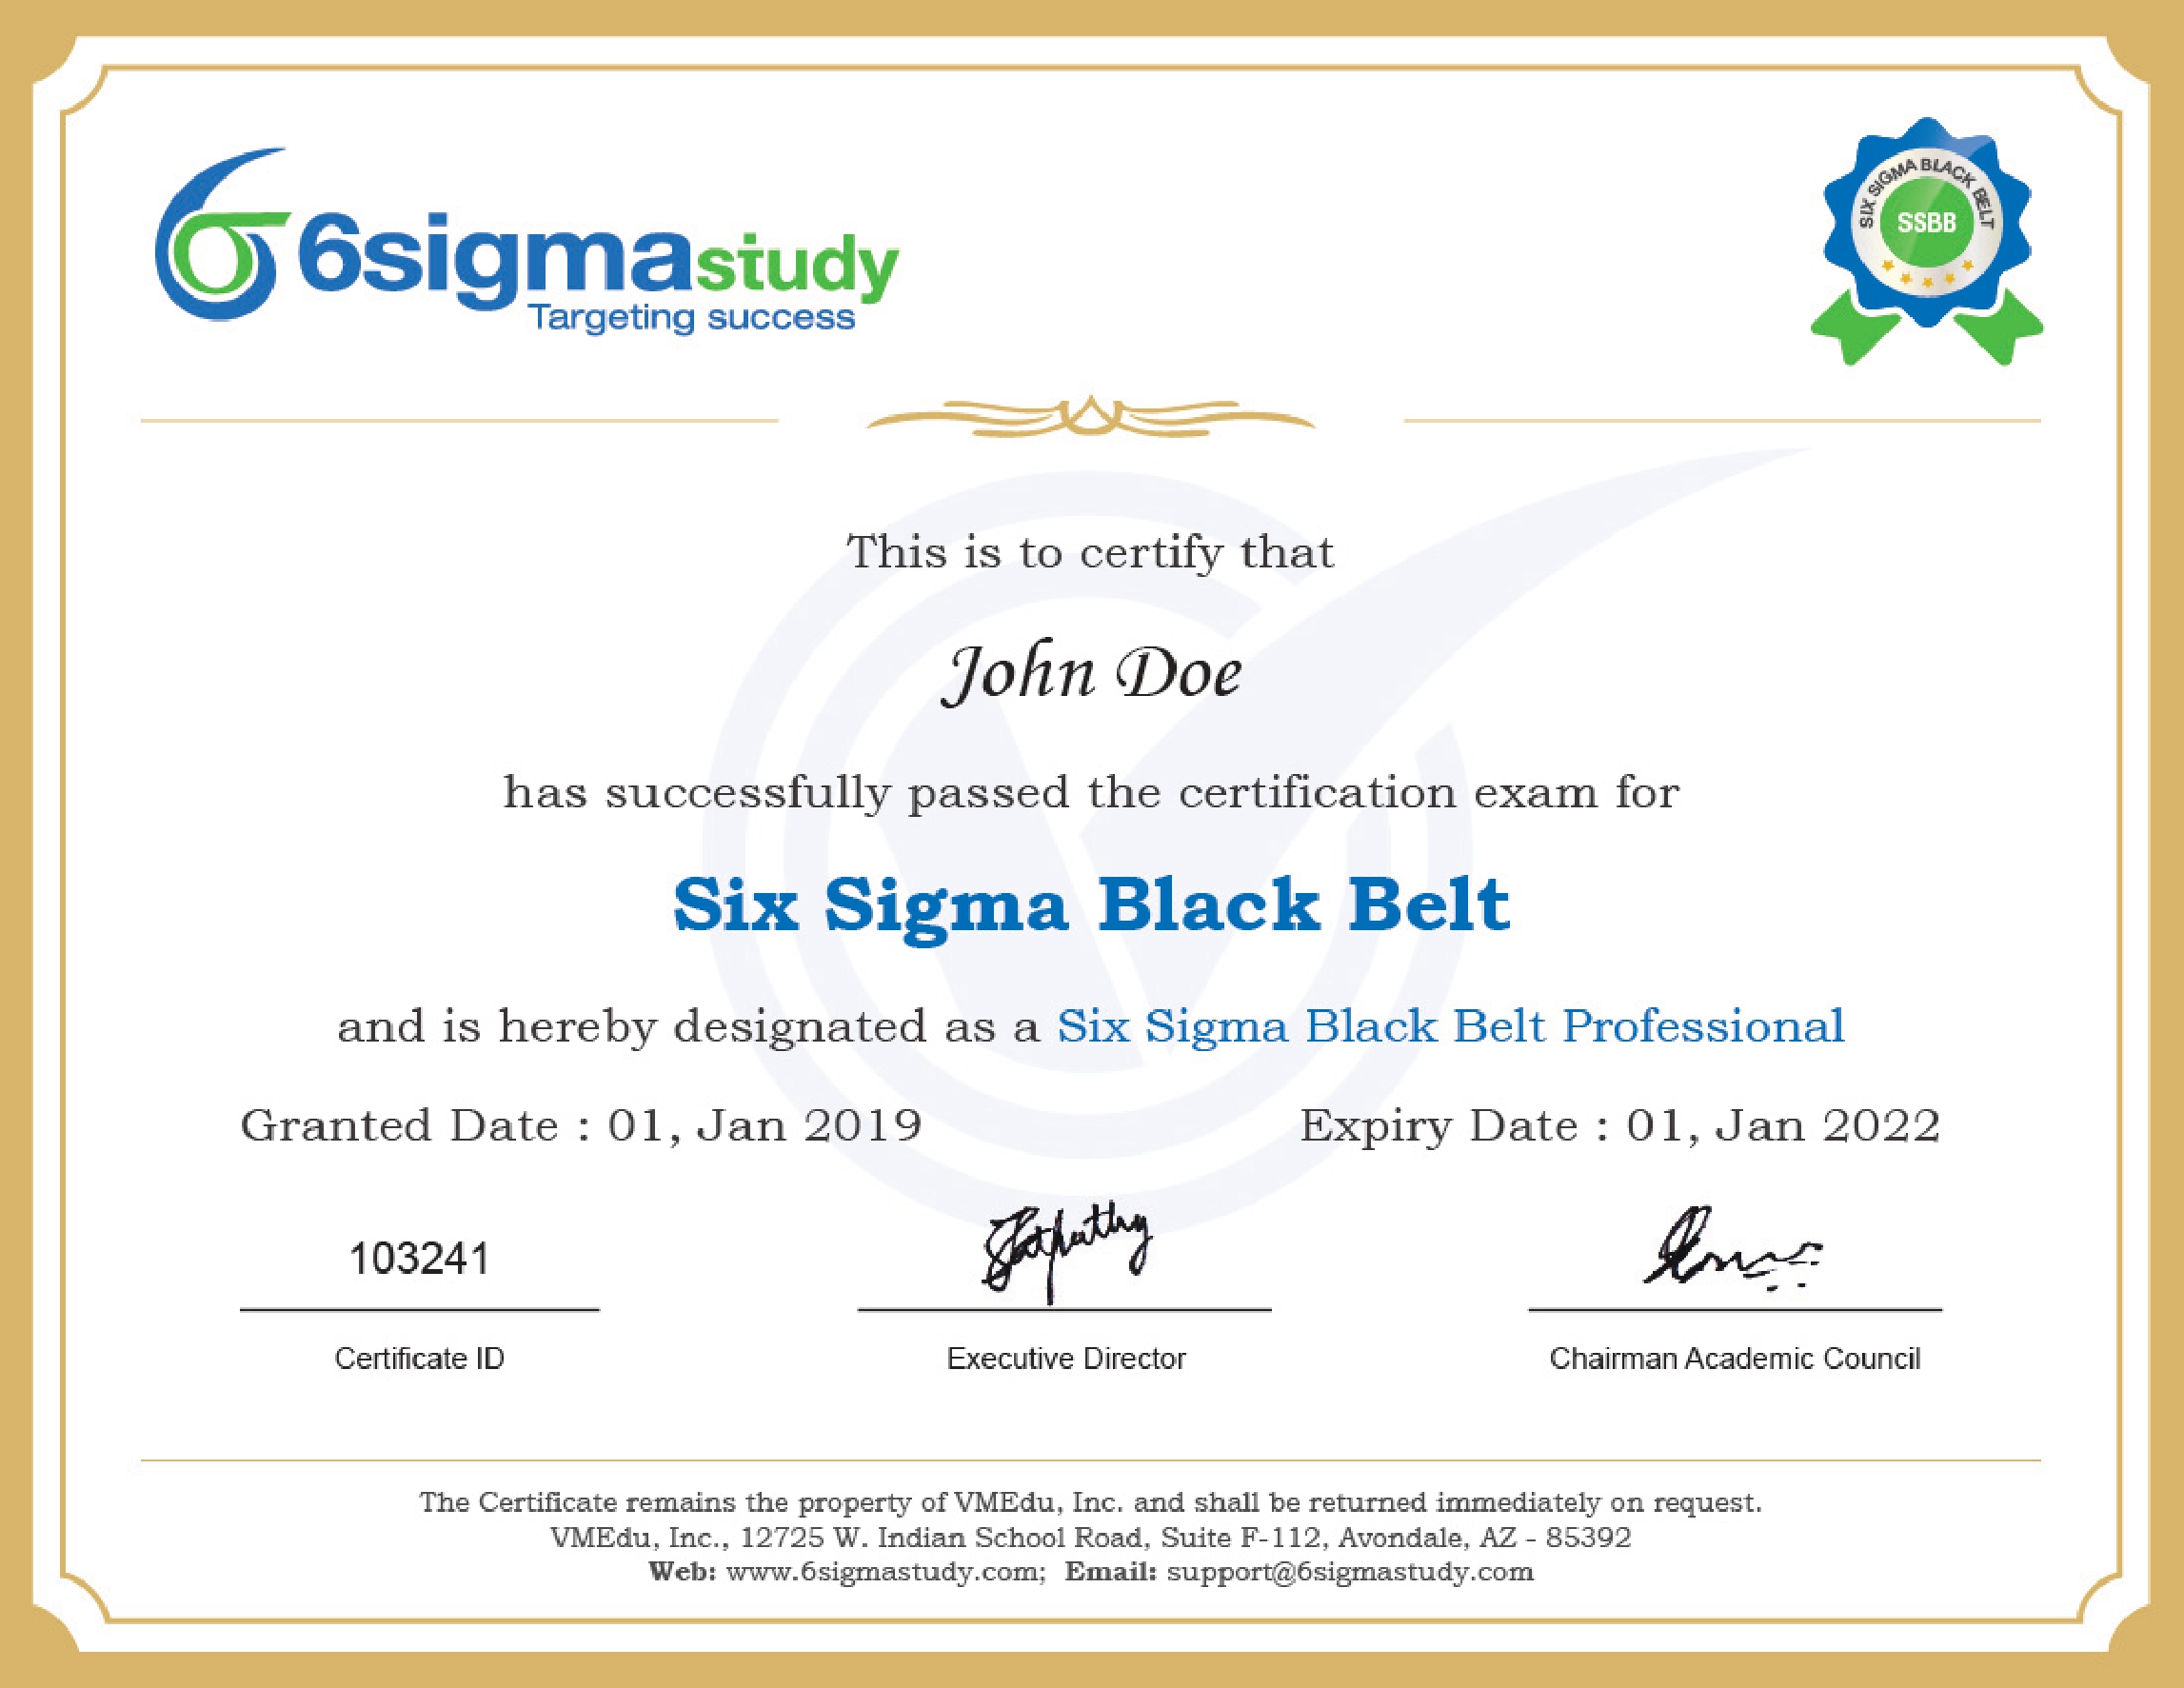 asq six sigma black belt